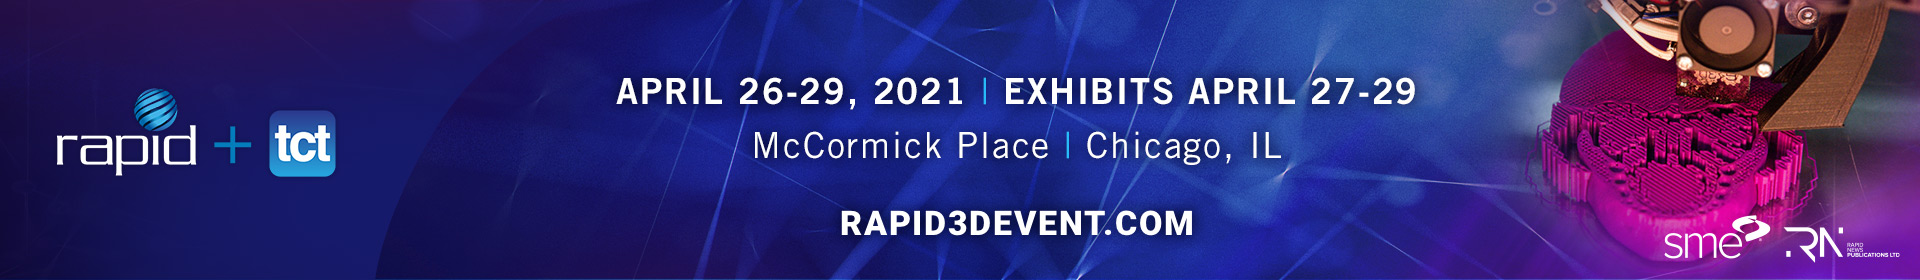 RAPID + TCT 2021 Event Banner